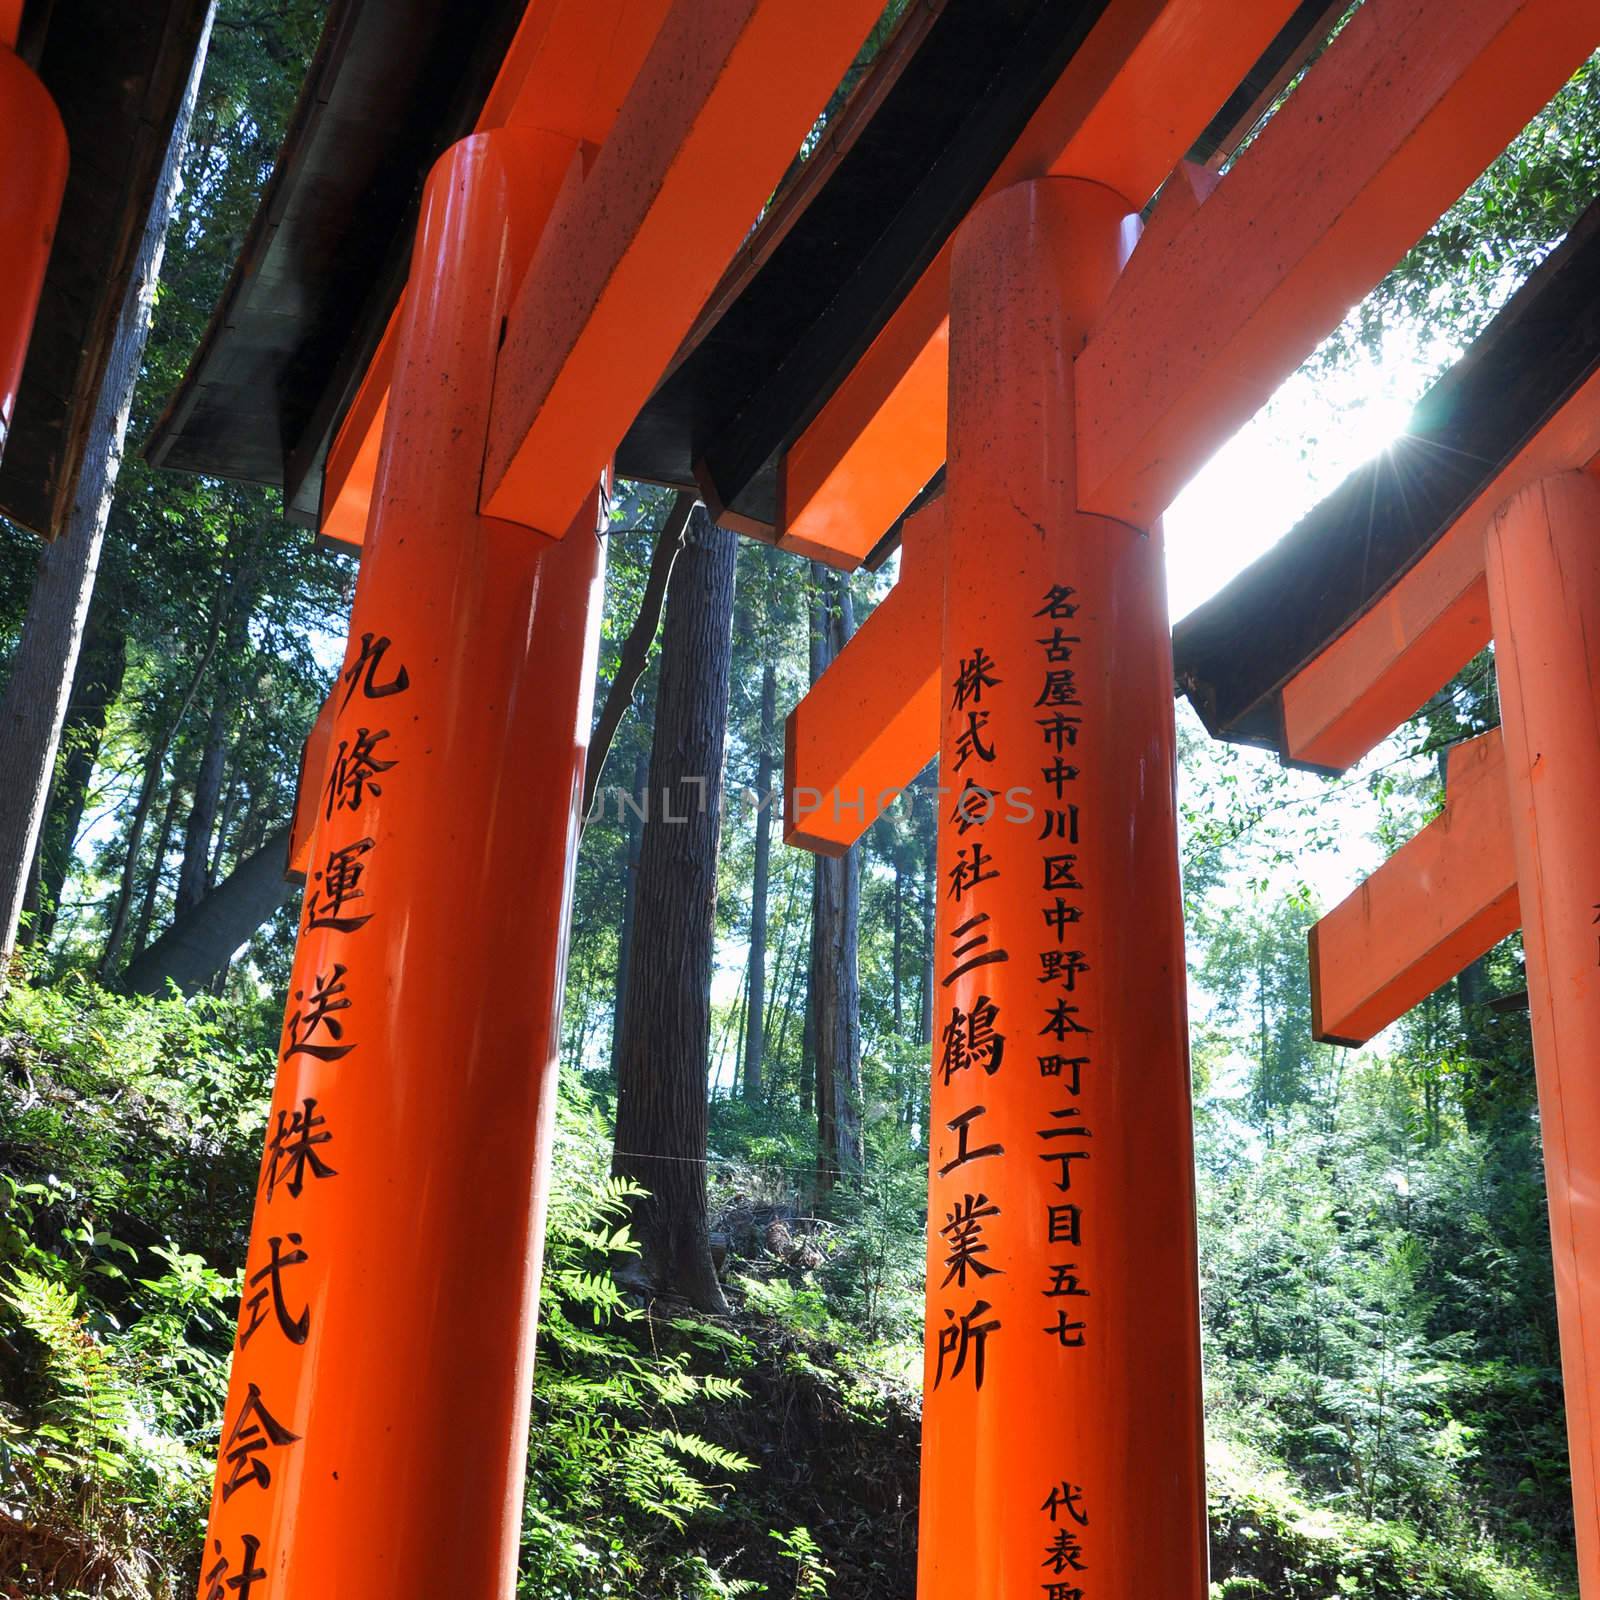  Fushimi Inari Shrine in Kyoto by siraanamwong